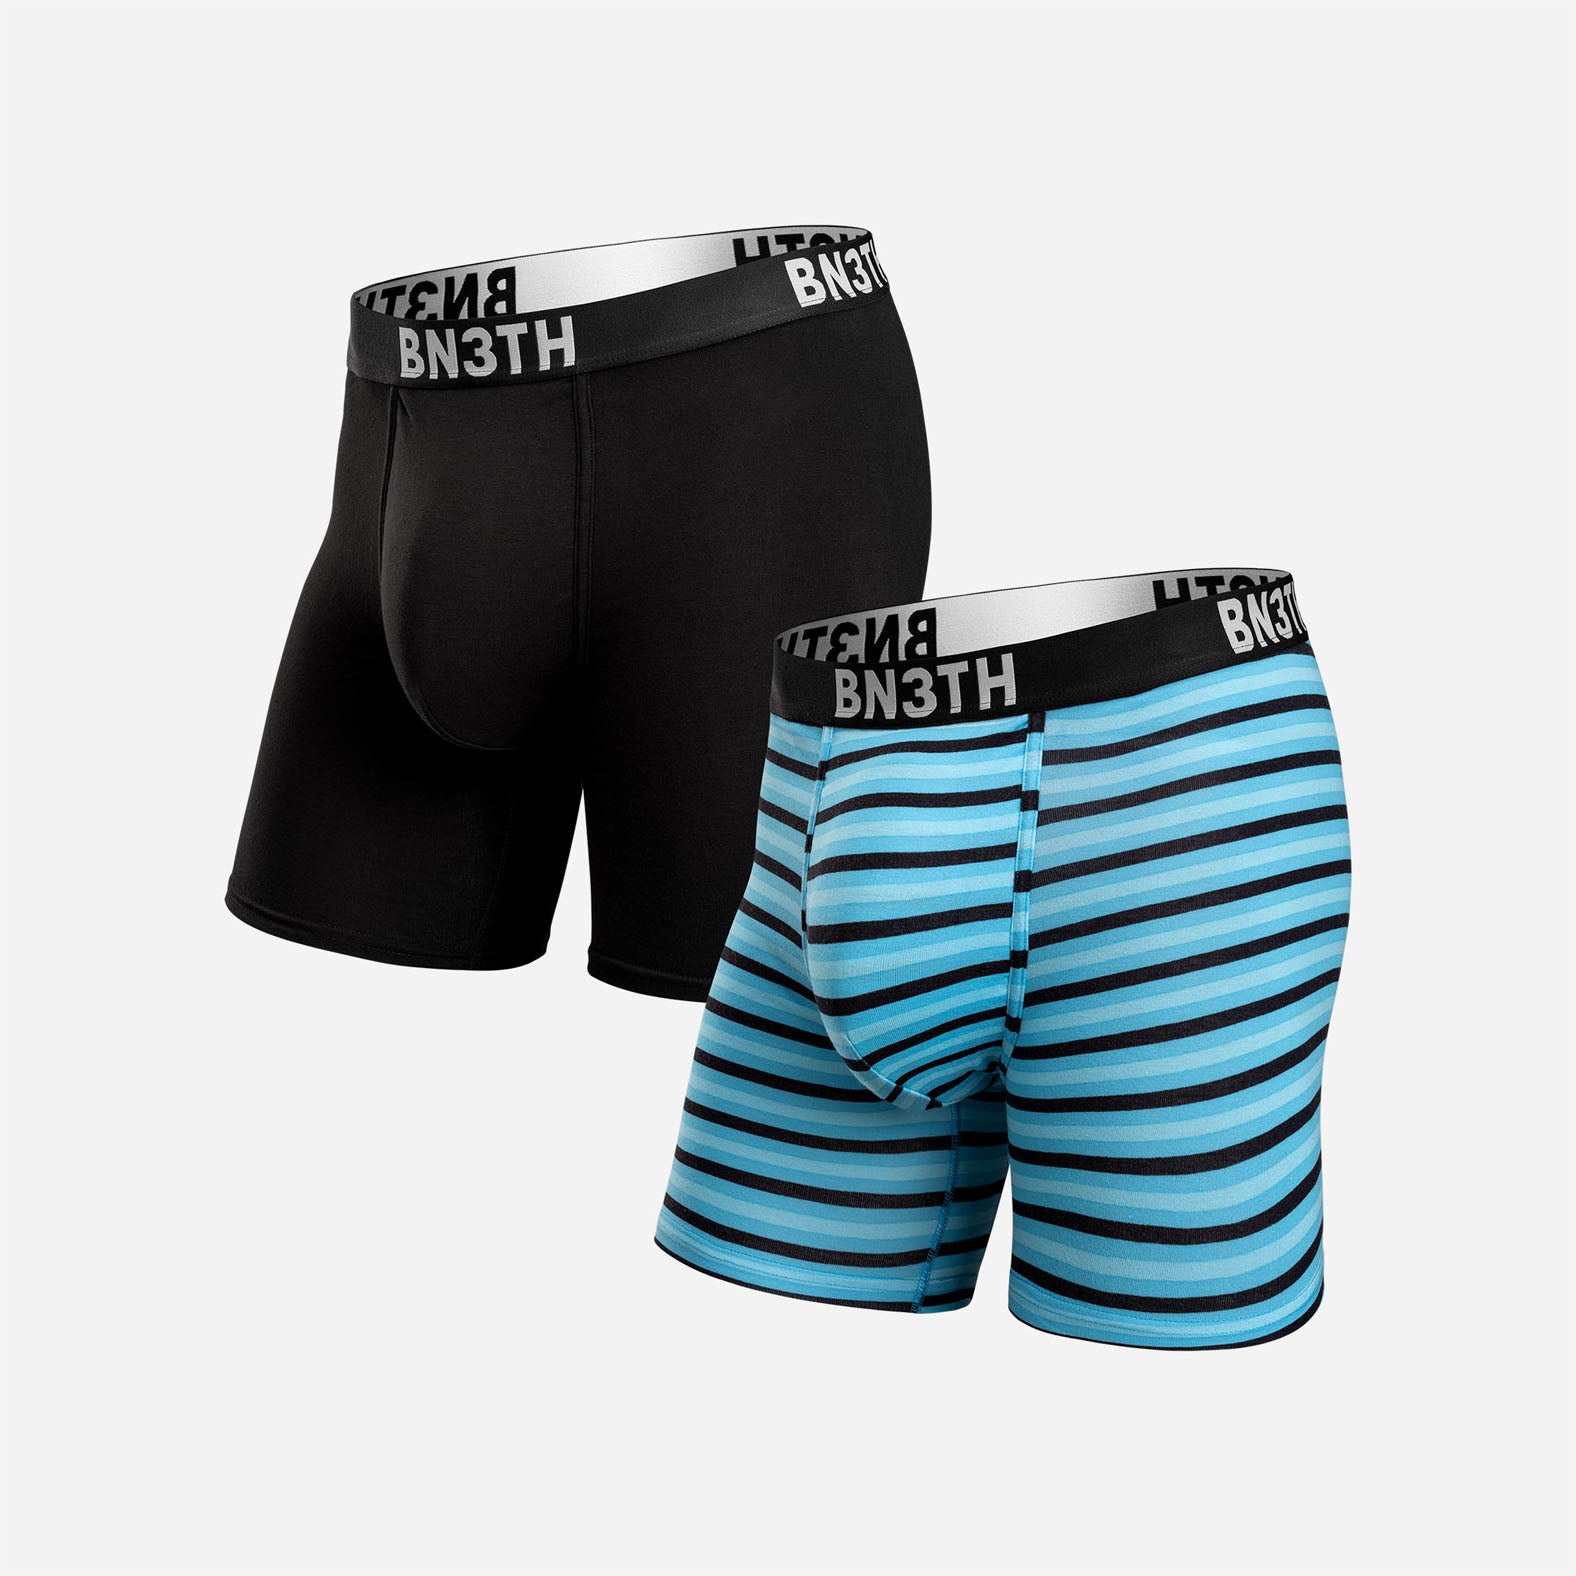 Outset Boxer Brief: Black/Mini Tricolor Stripe Turquoise 2 Pack